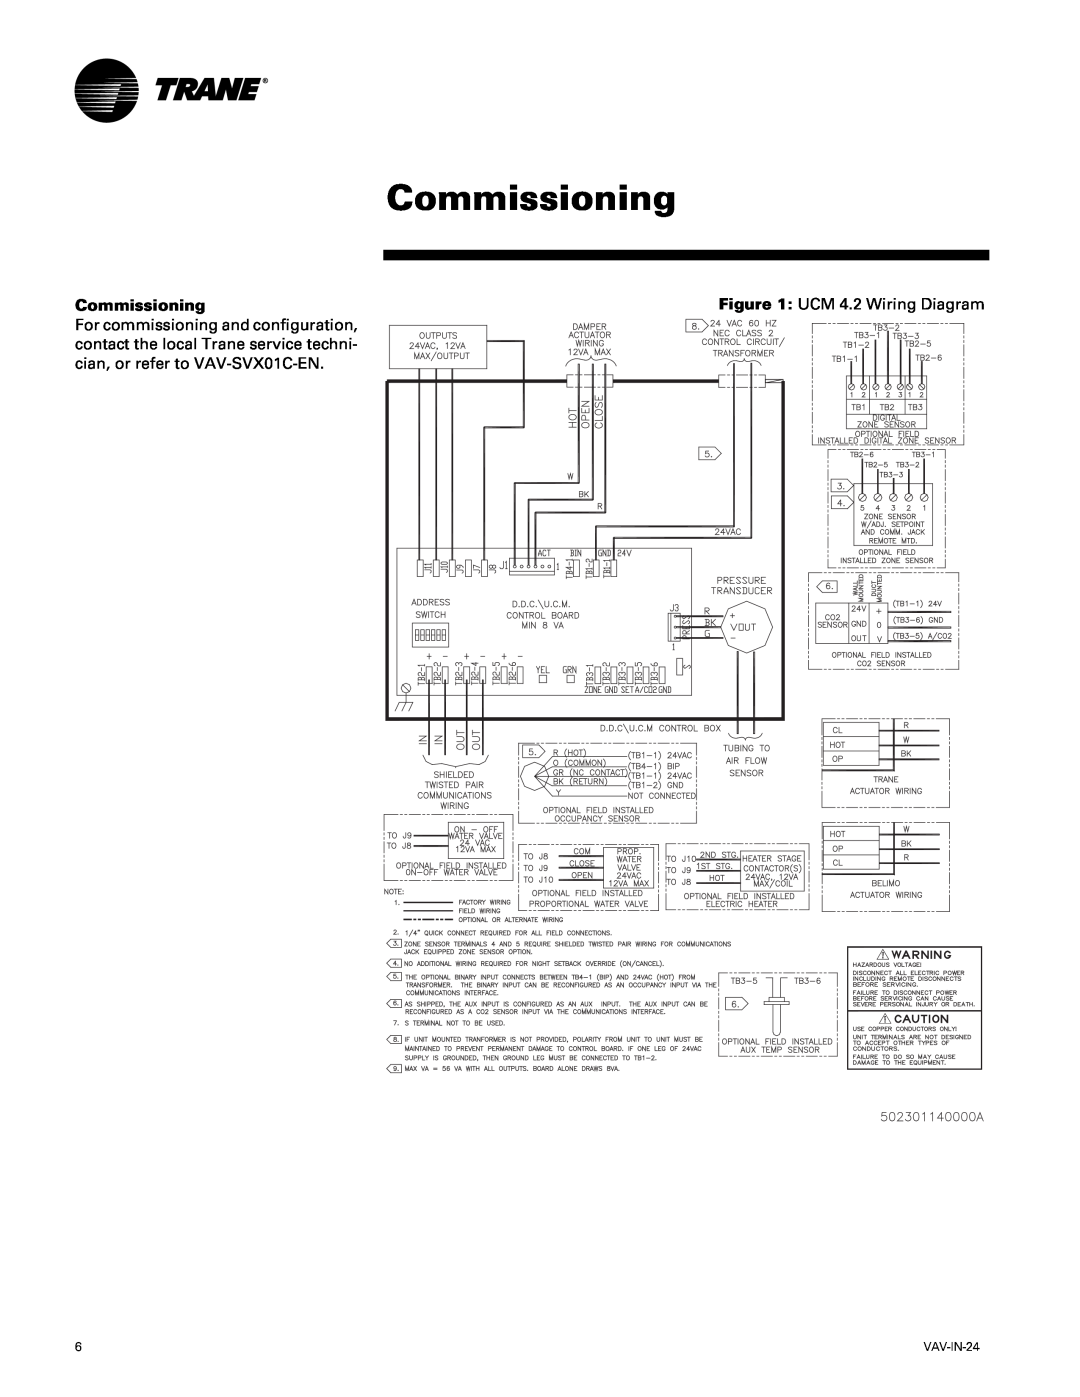 Trane VAV-IN-24, Unit Control Module (UCM) 4.2 Retrofit Model VAV manual Commissioning 